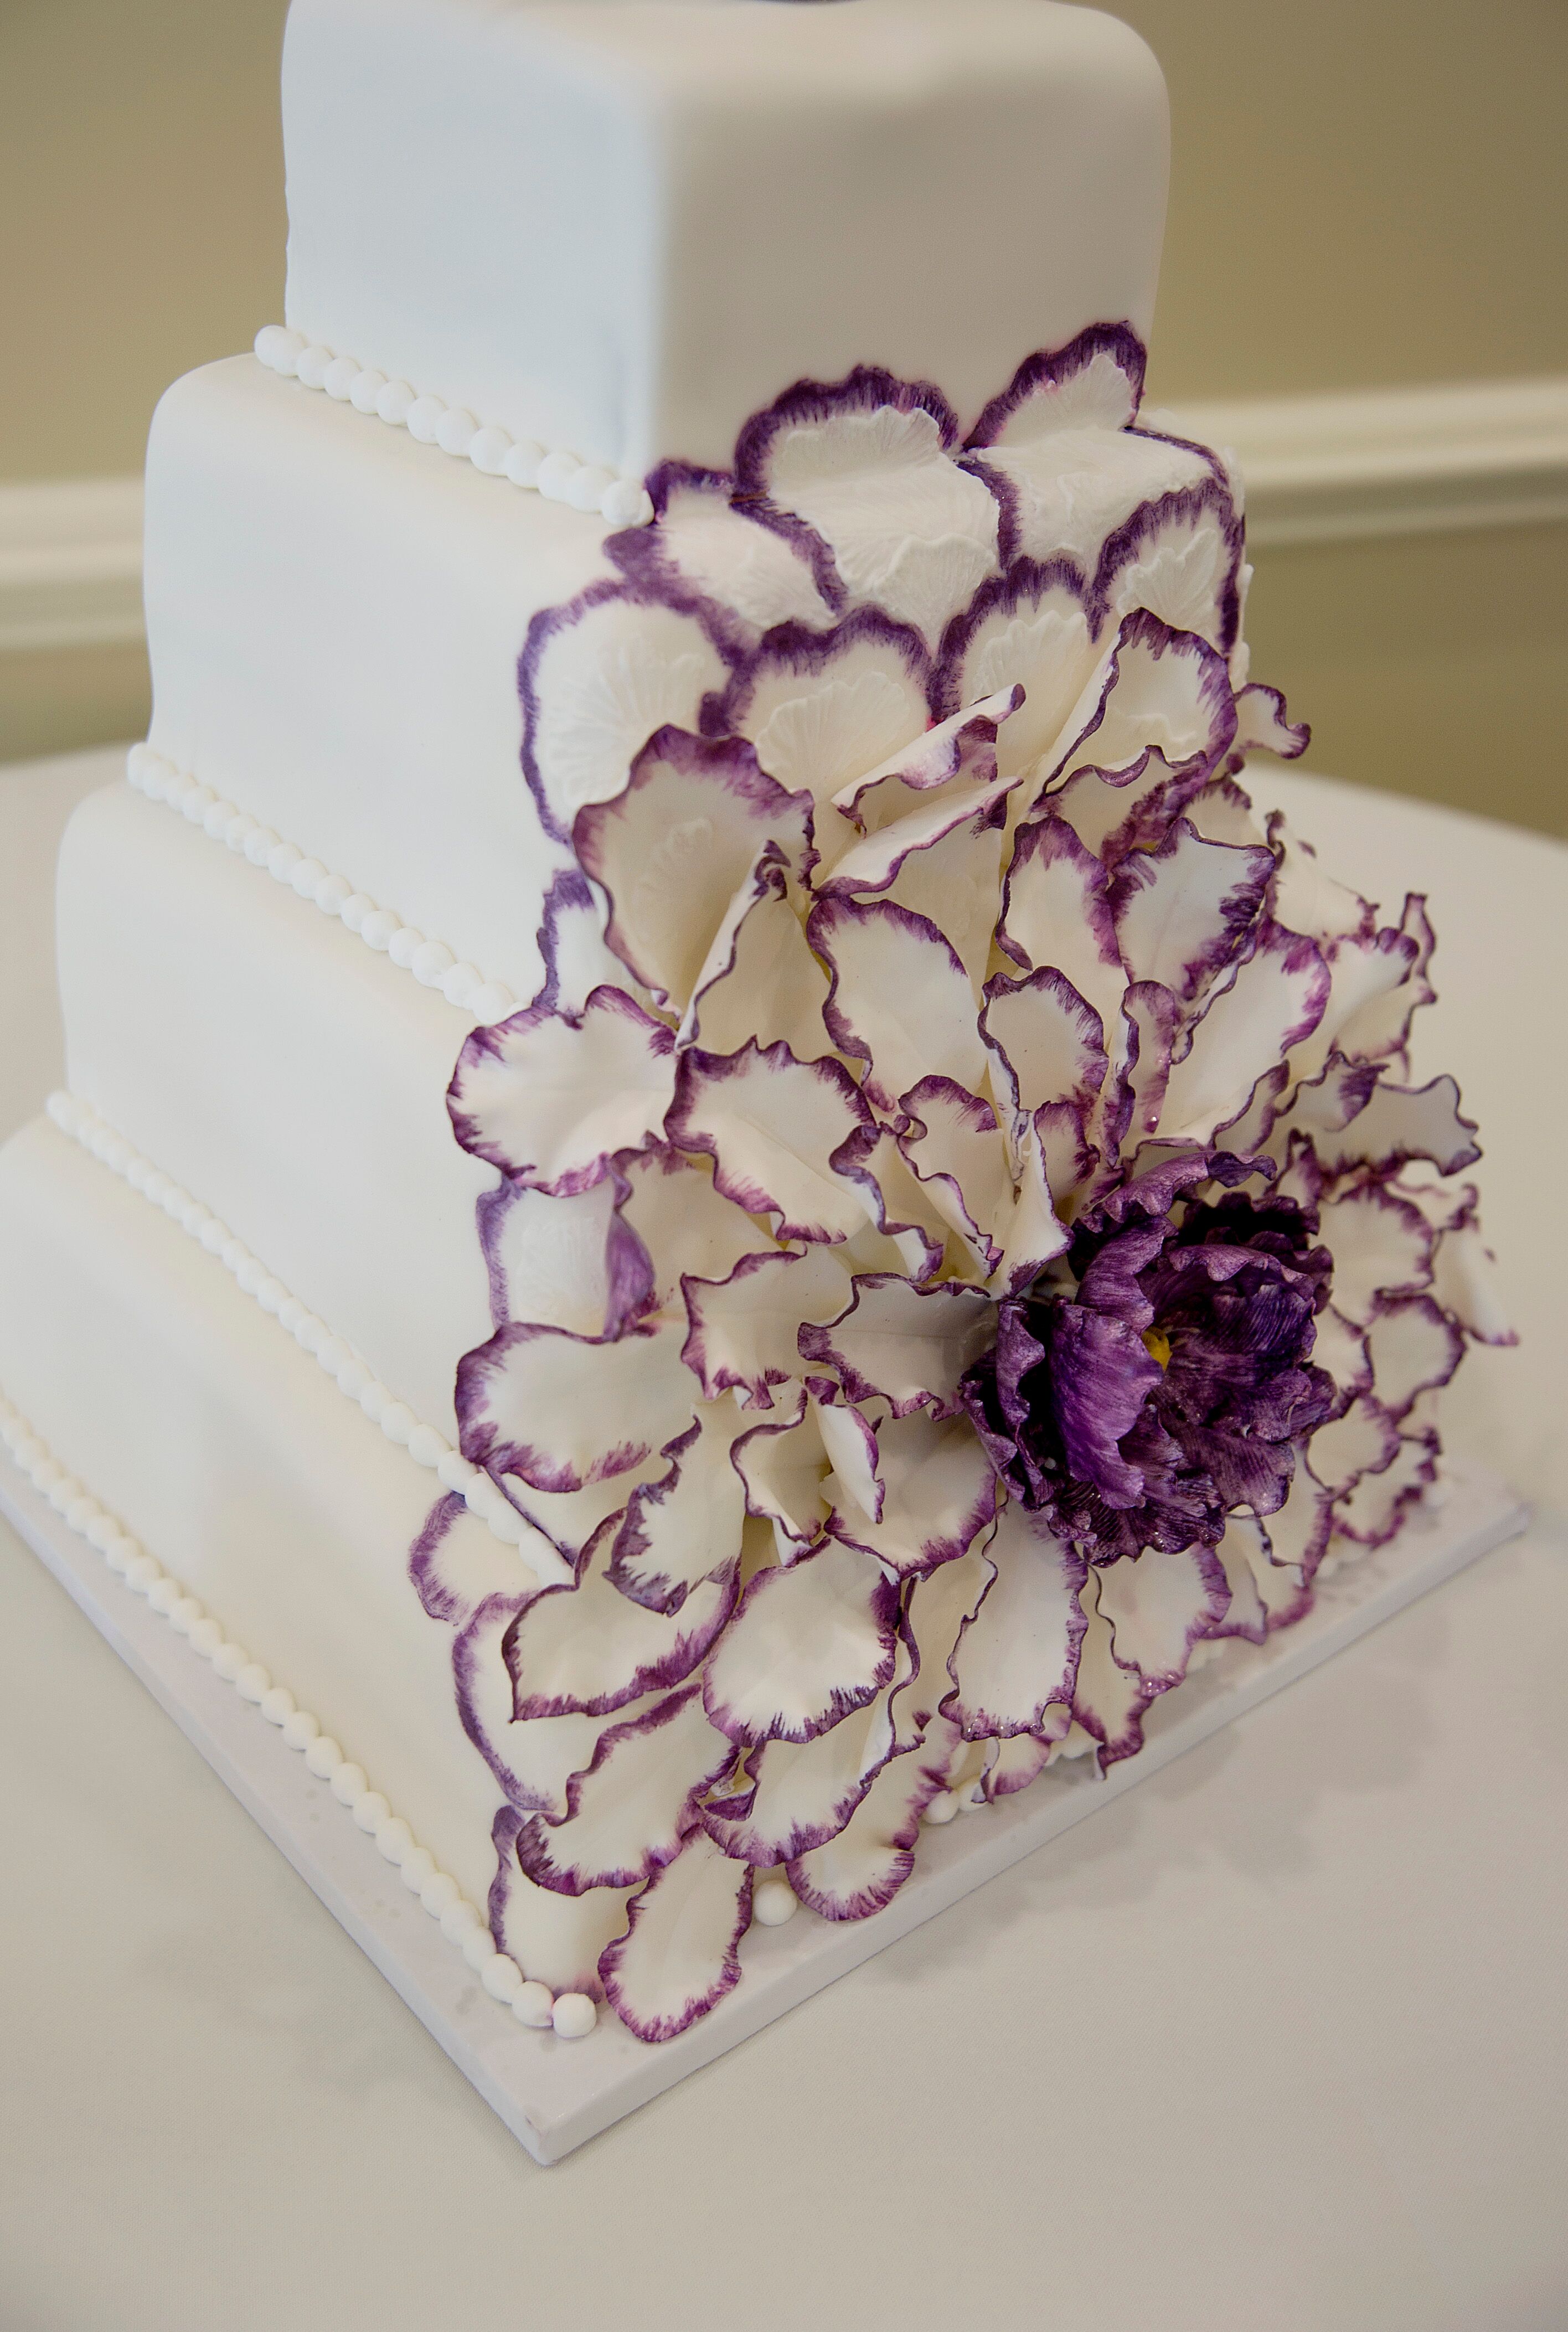 Stunning Purple Cake Flower on White Wedding Cake